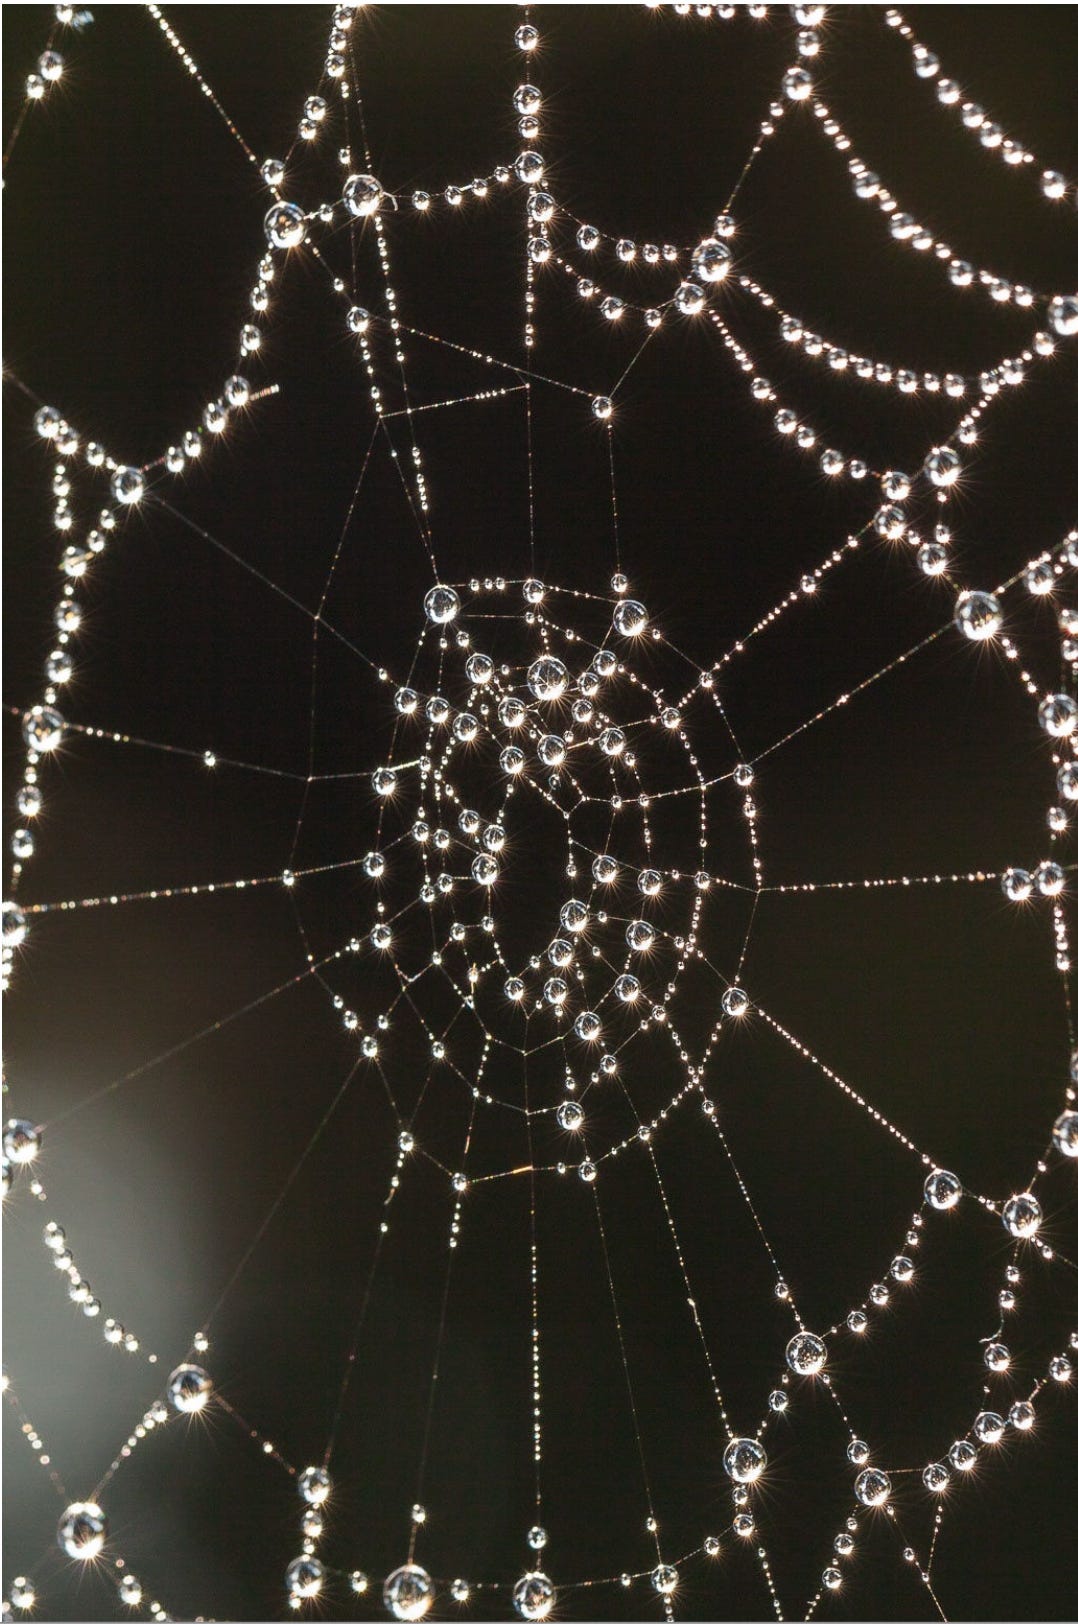 Louise Bourgeois: More than Spiderwoman – findingtimetowrite